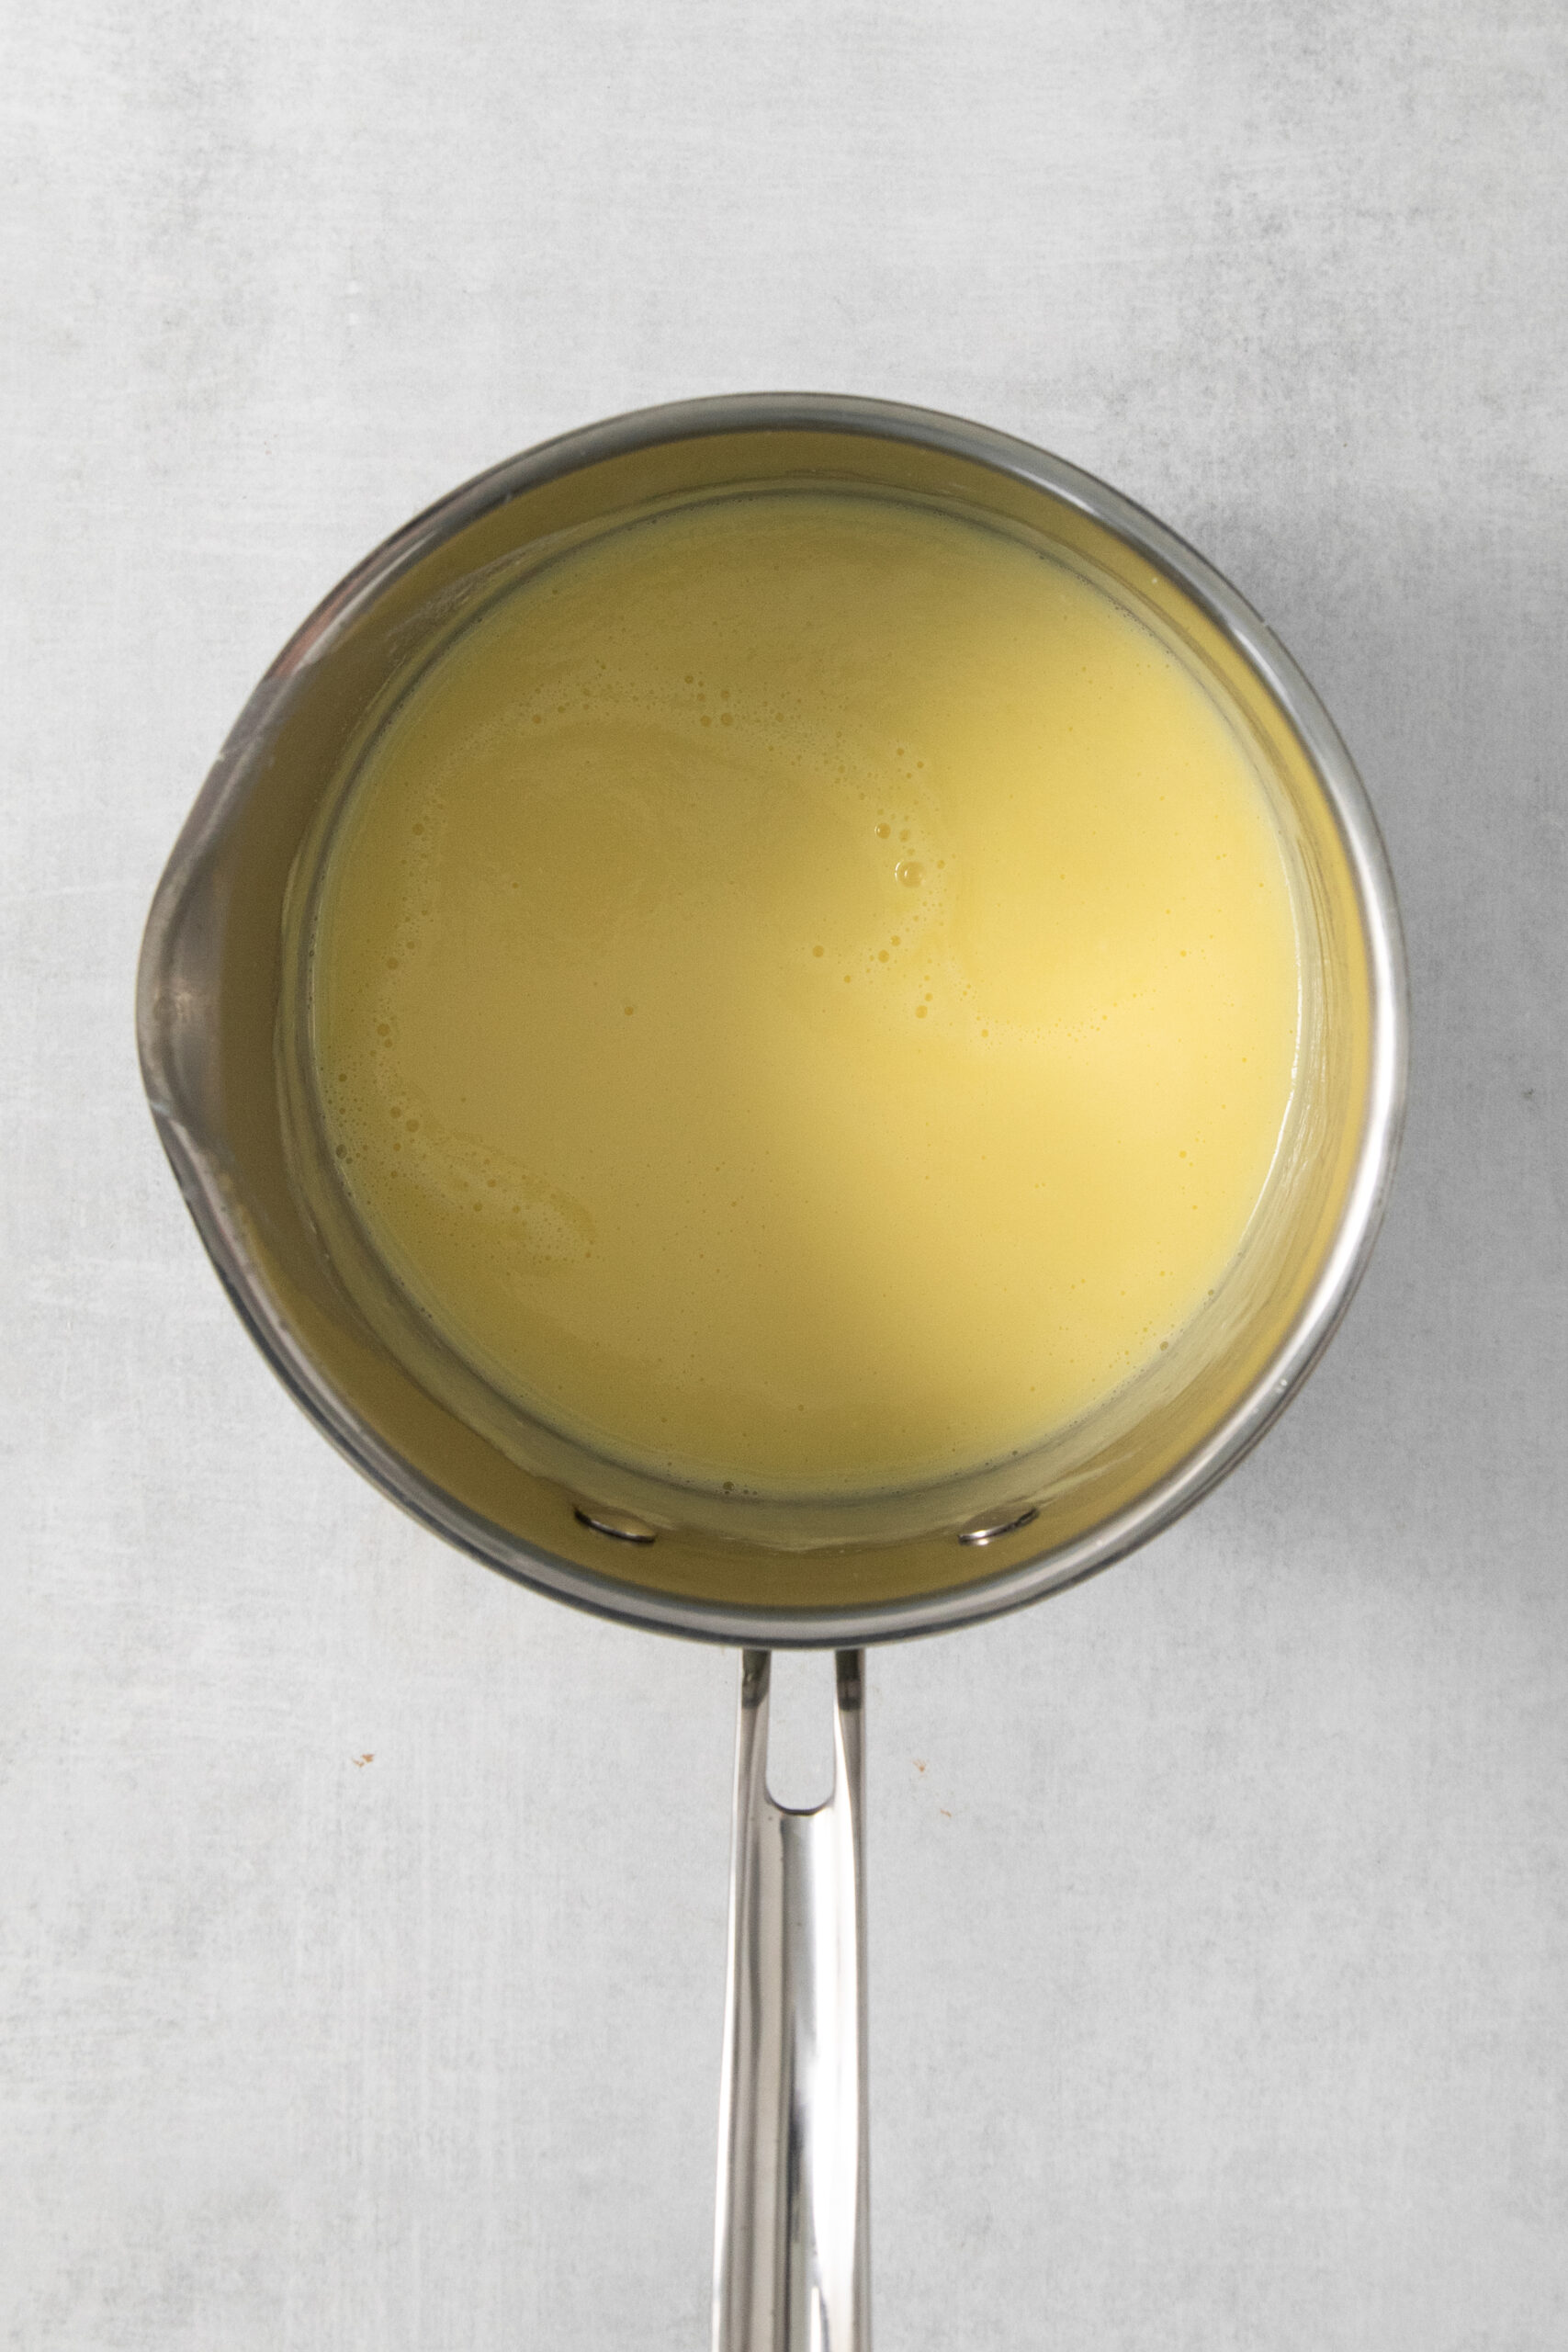 custard mixture in a pan